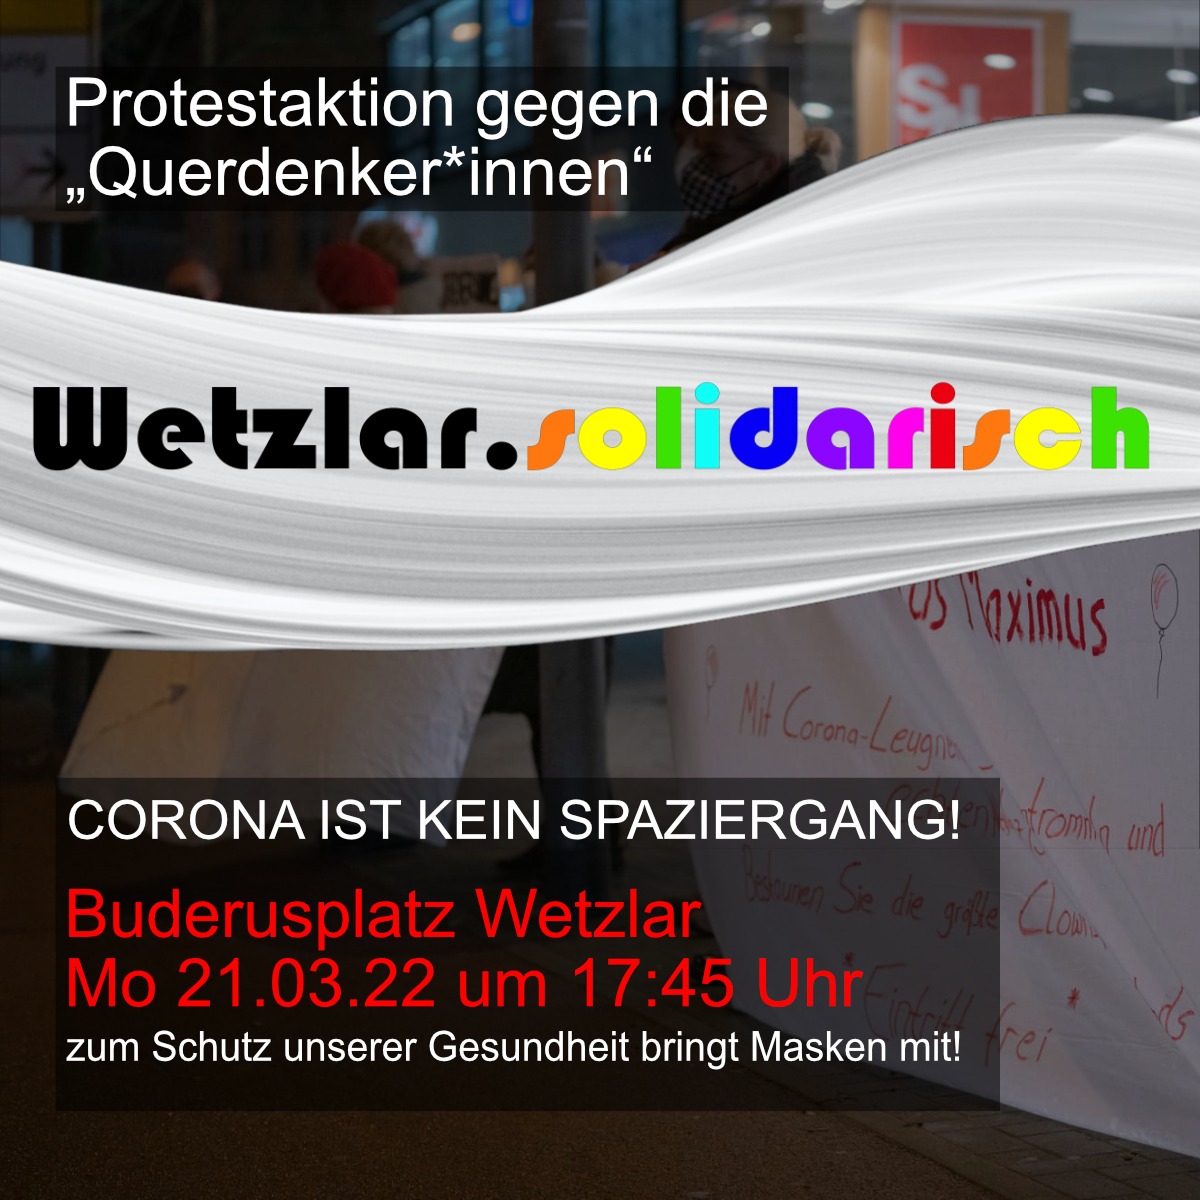 Mahnwache Wetzlar.solidarisch sharepic